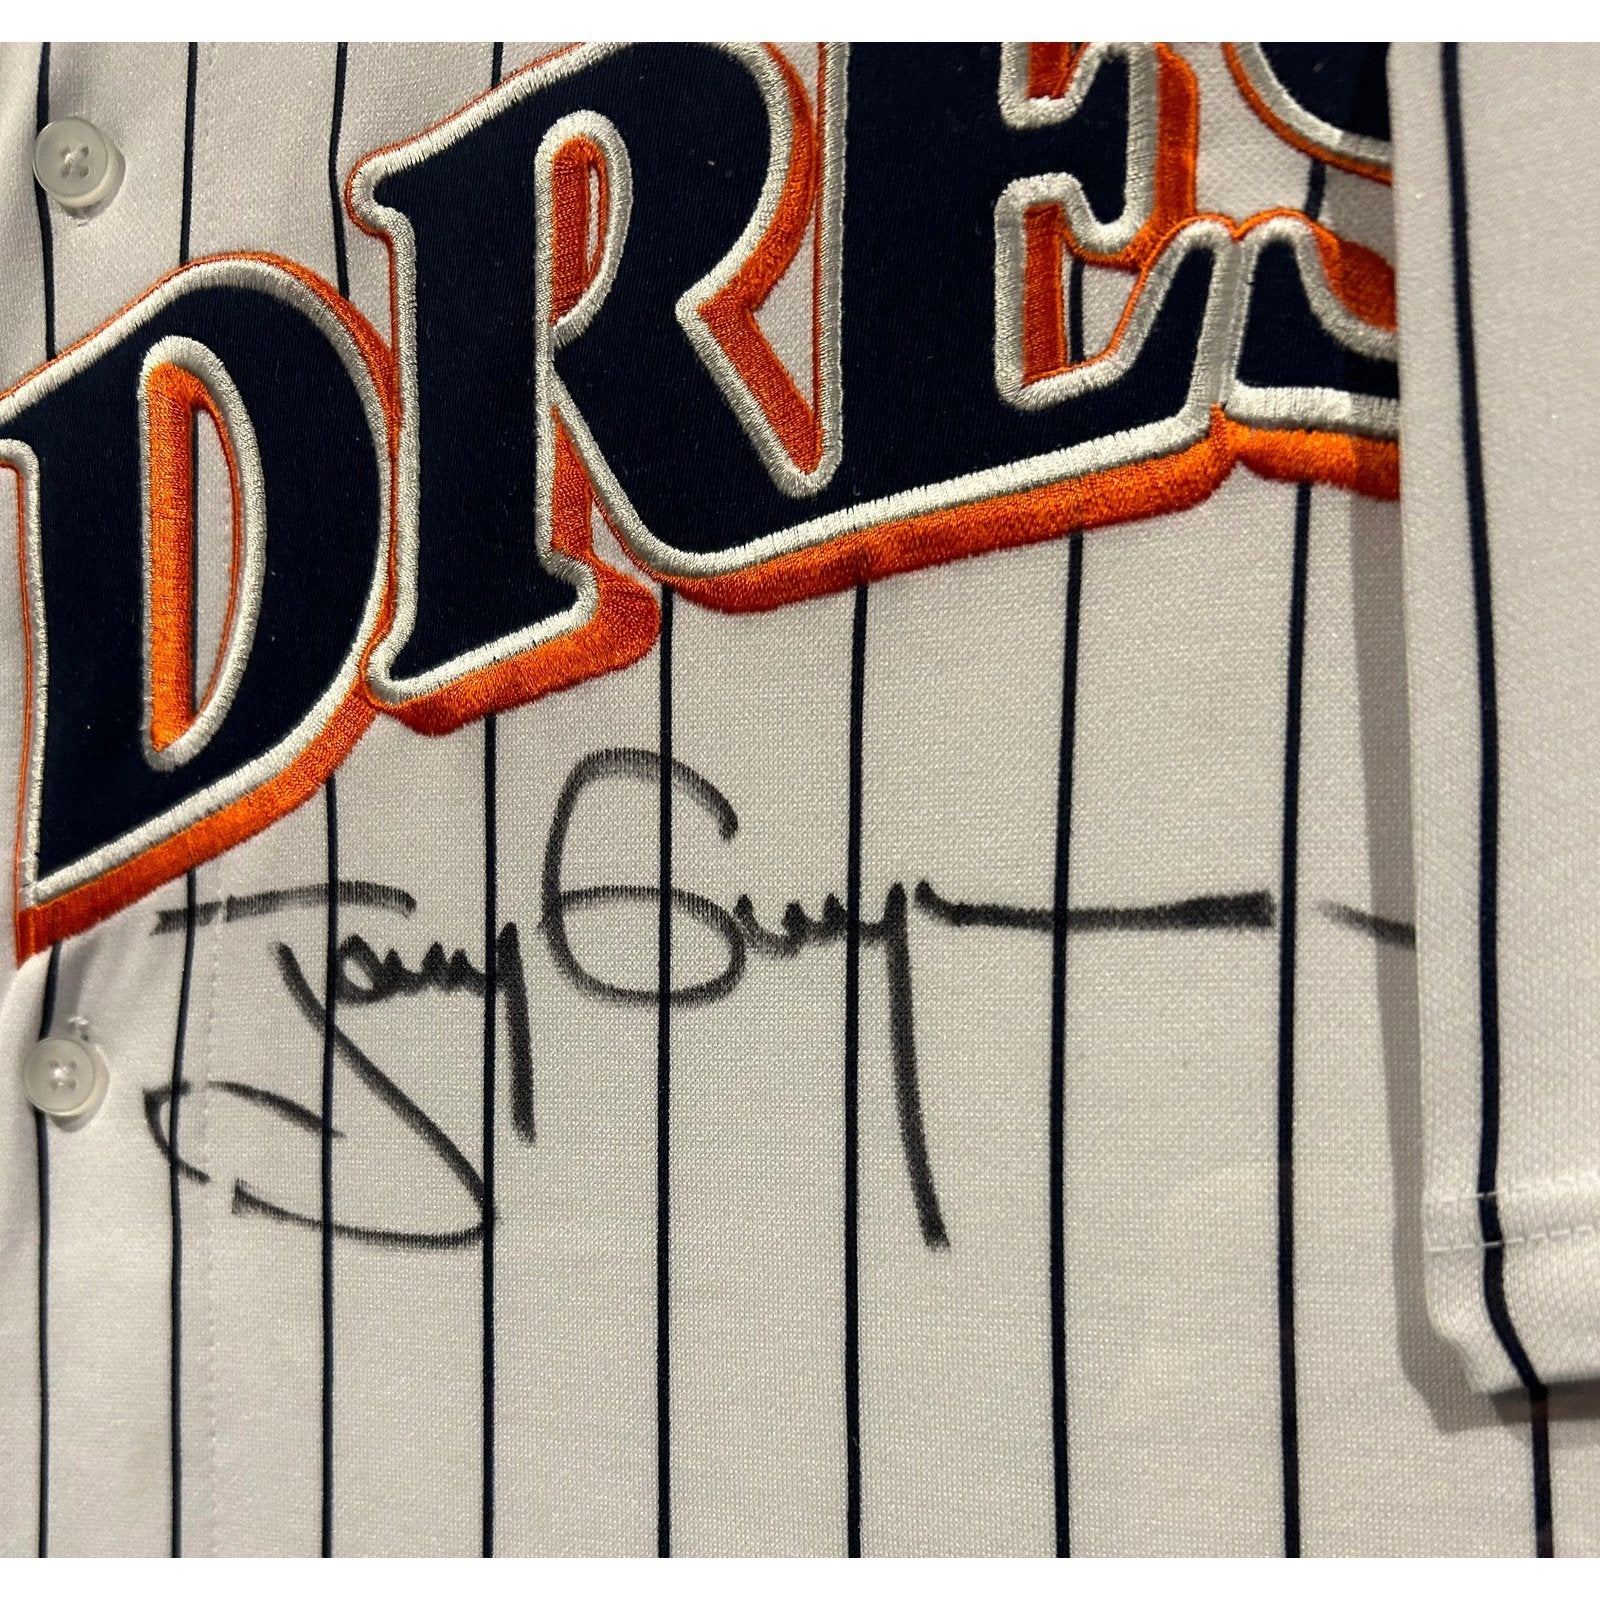 Tony Gwynn Autographed Signed Framed San Diego Padres 